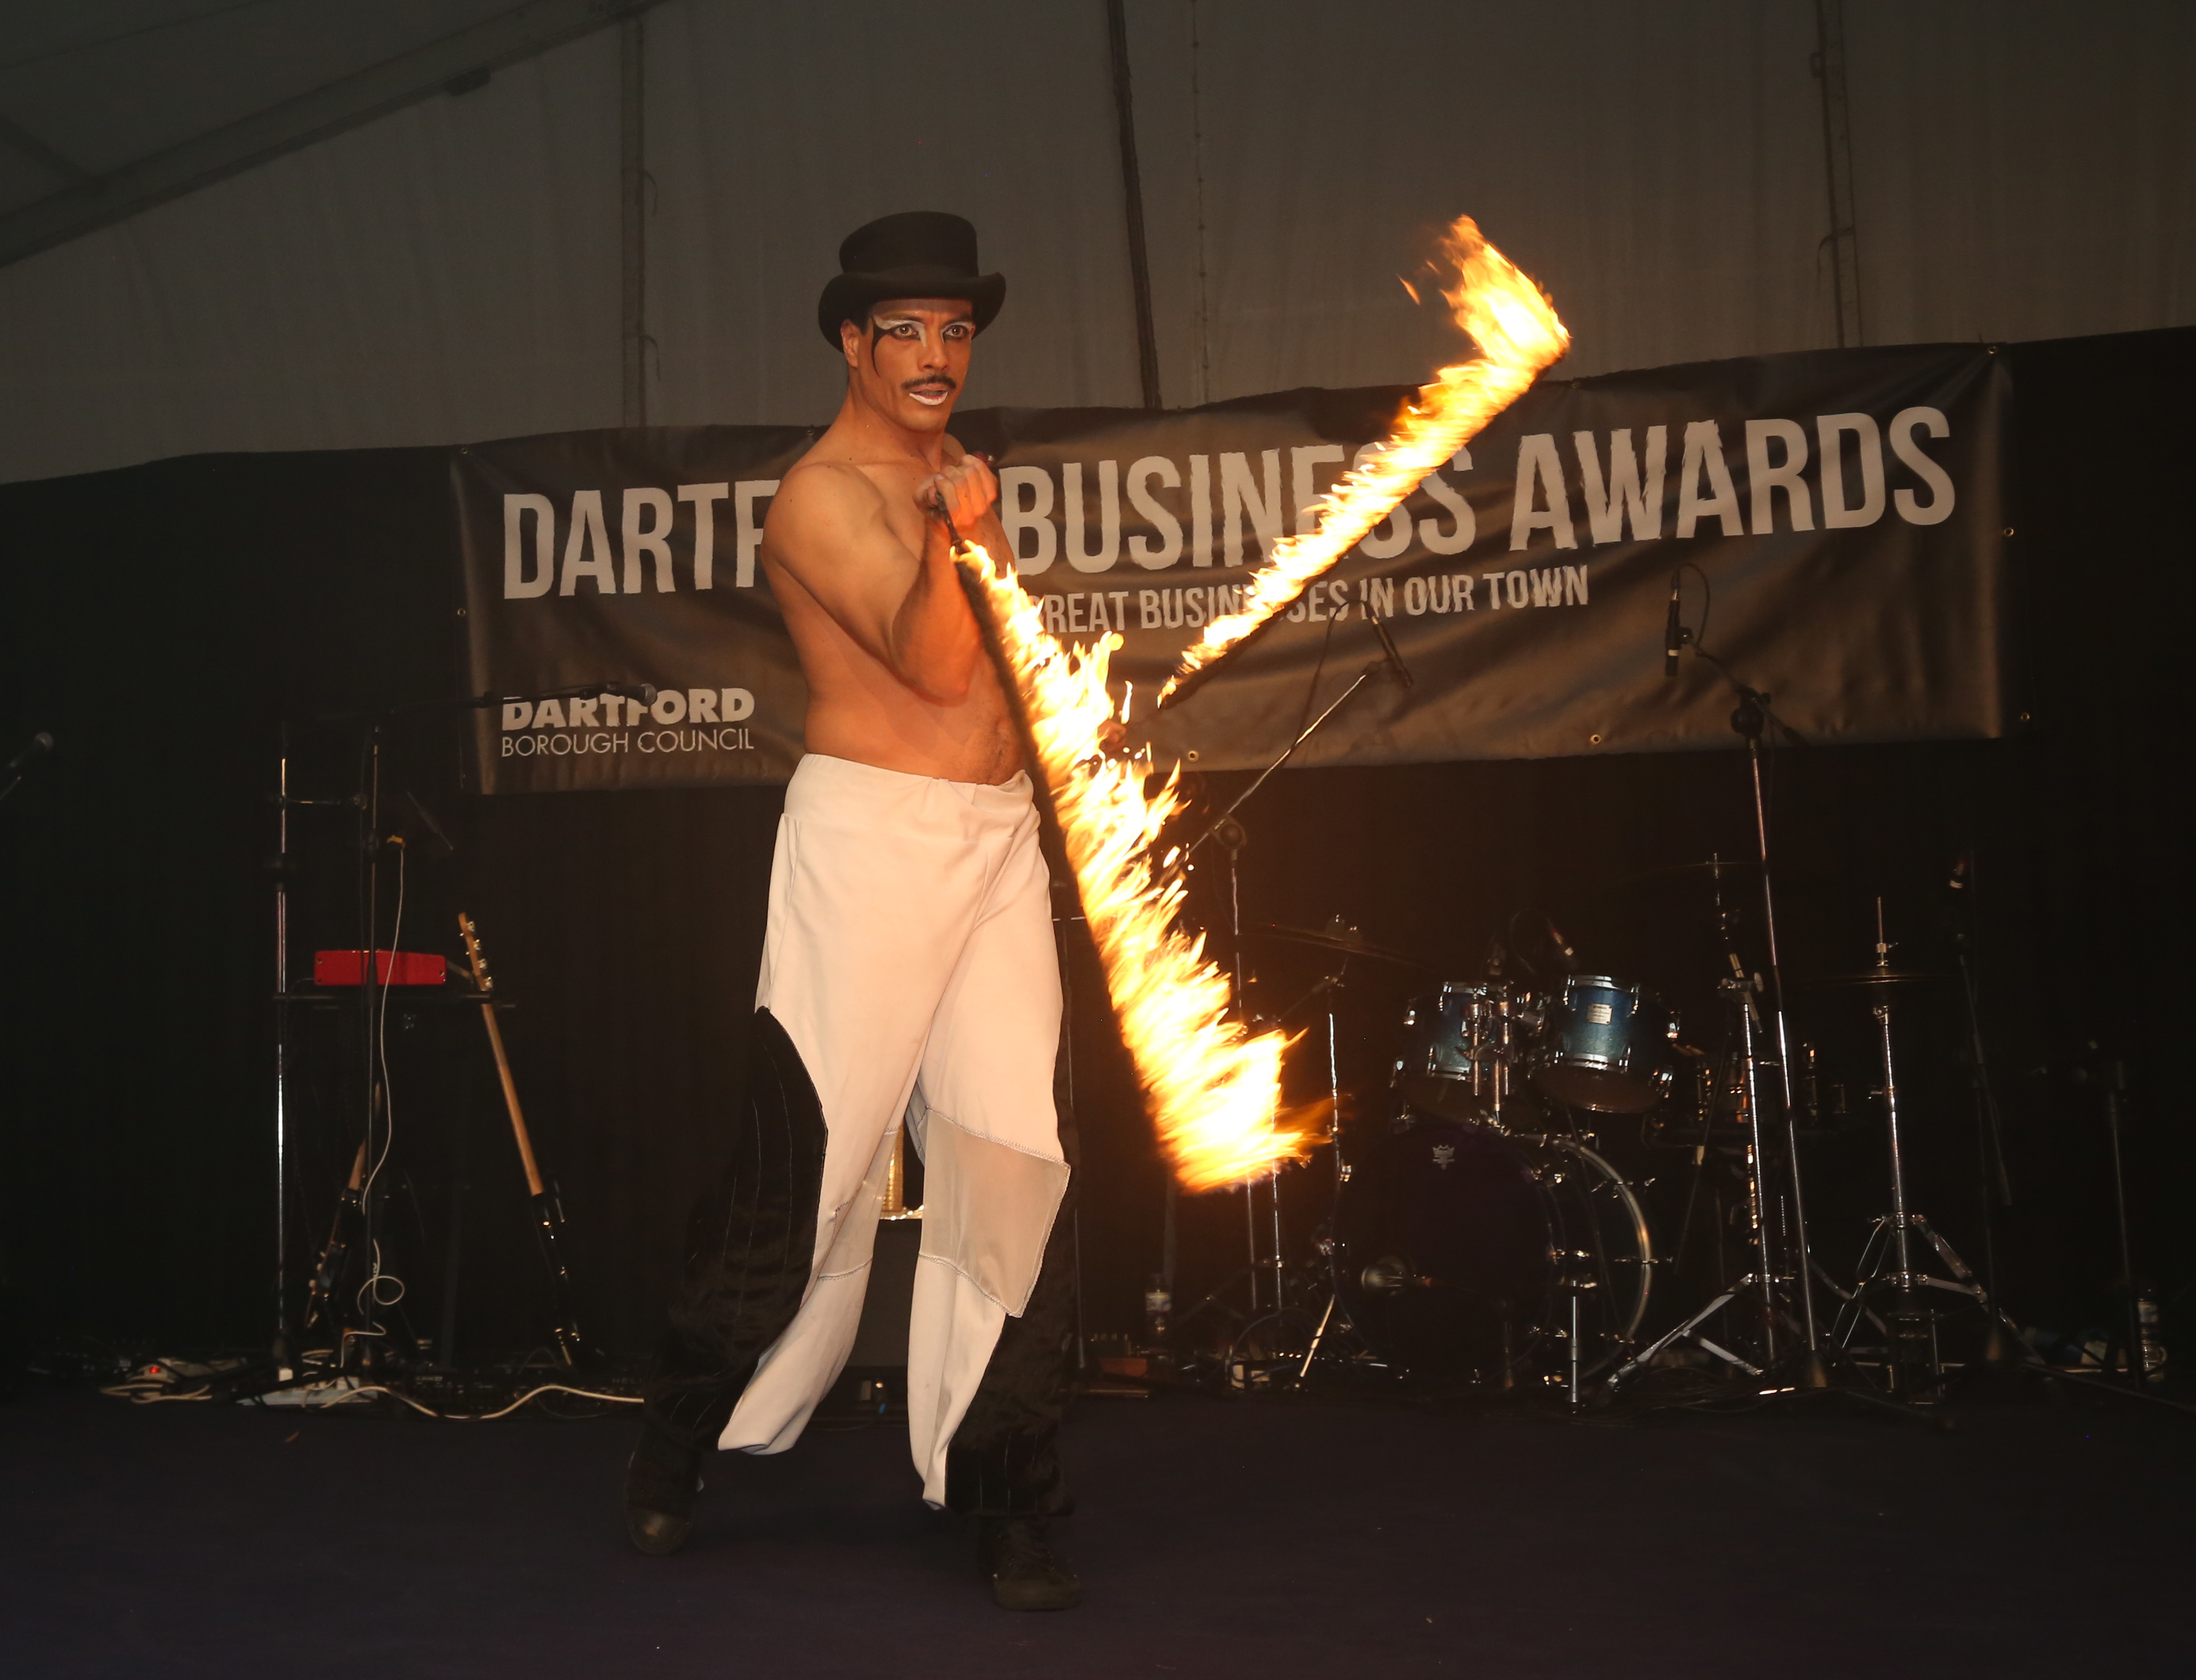 Fire juggler at the Dartford Business Awards